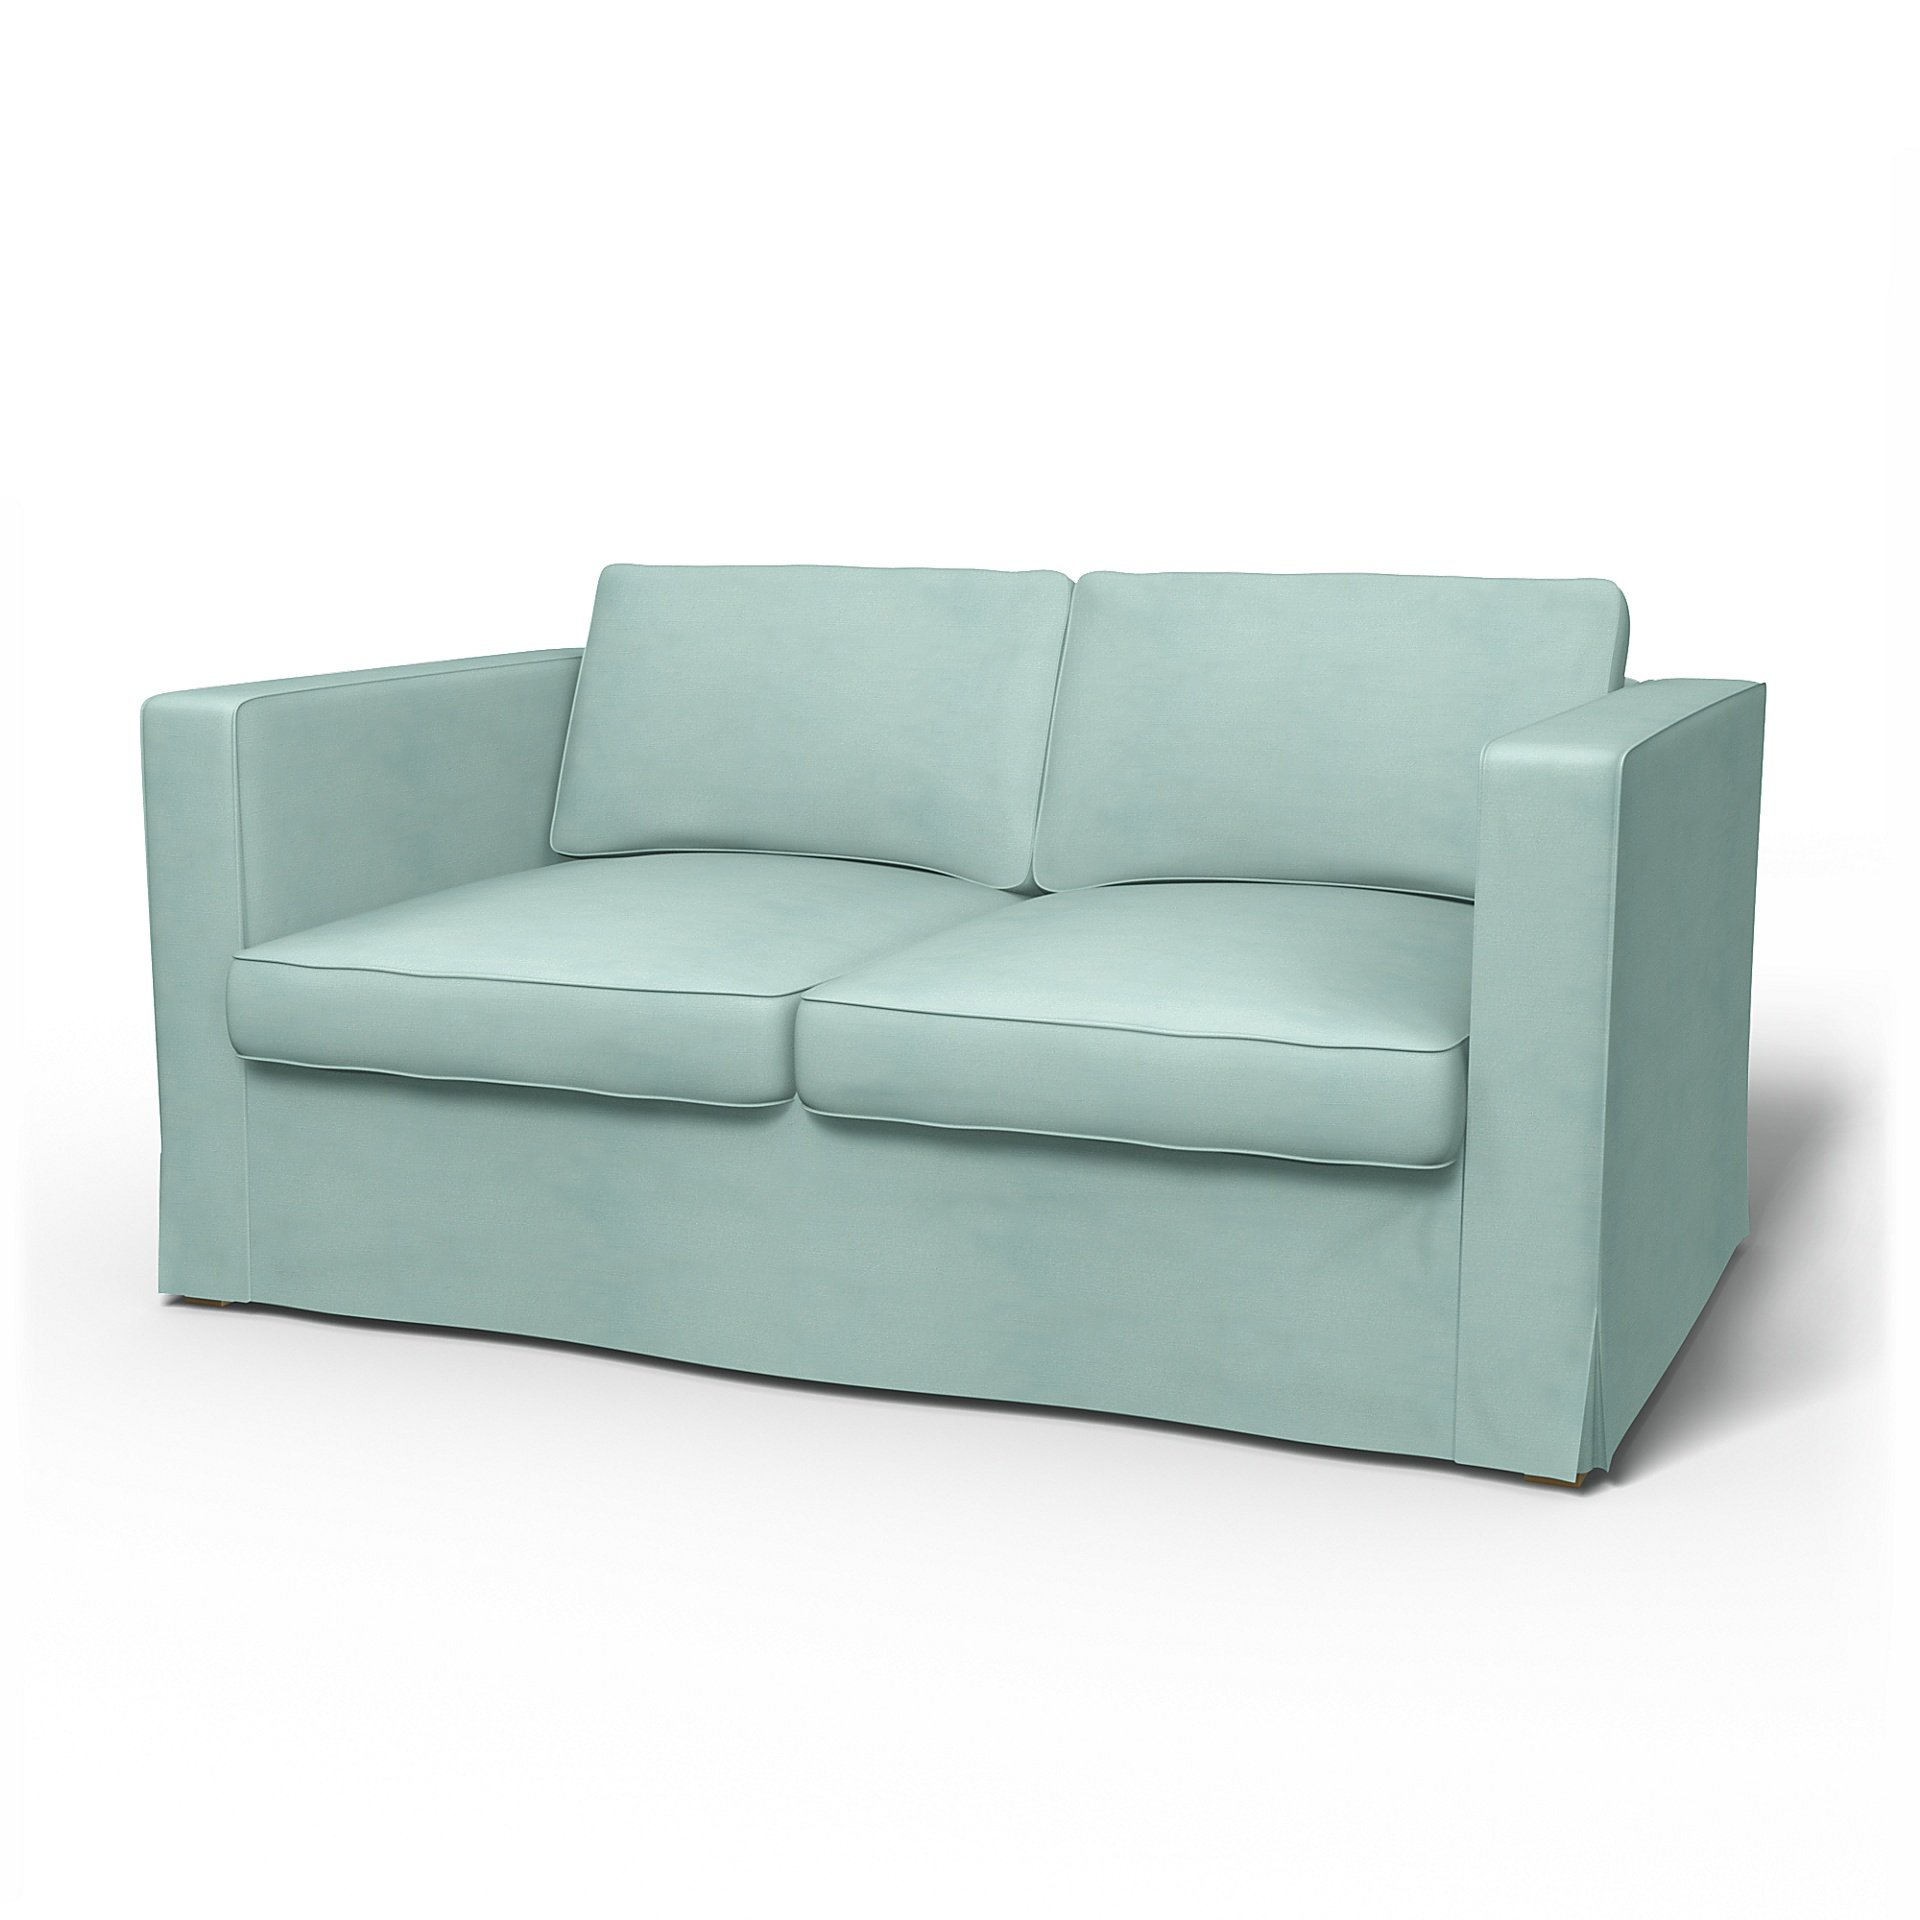 IKEA - Karlanda 2 Seater Sofa Cover, Mineral Blue, Linen - Bemz